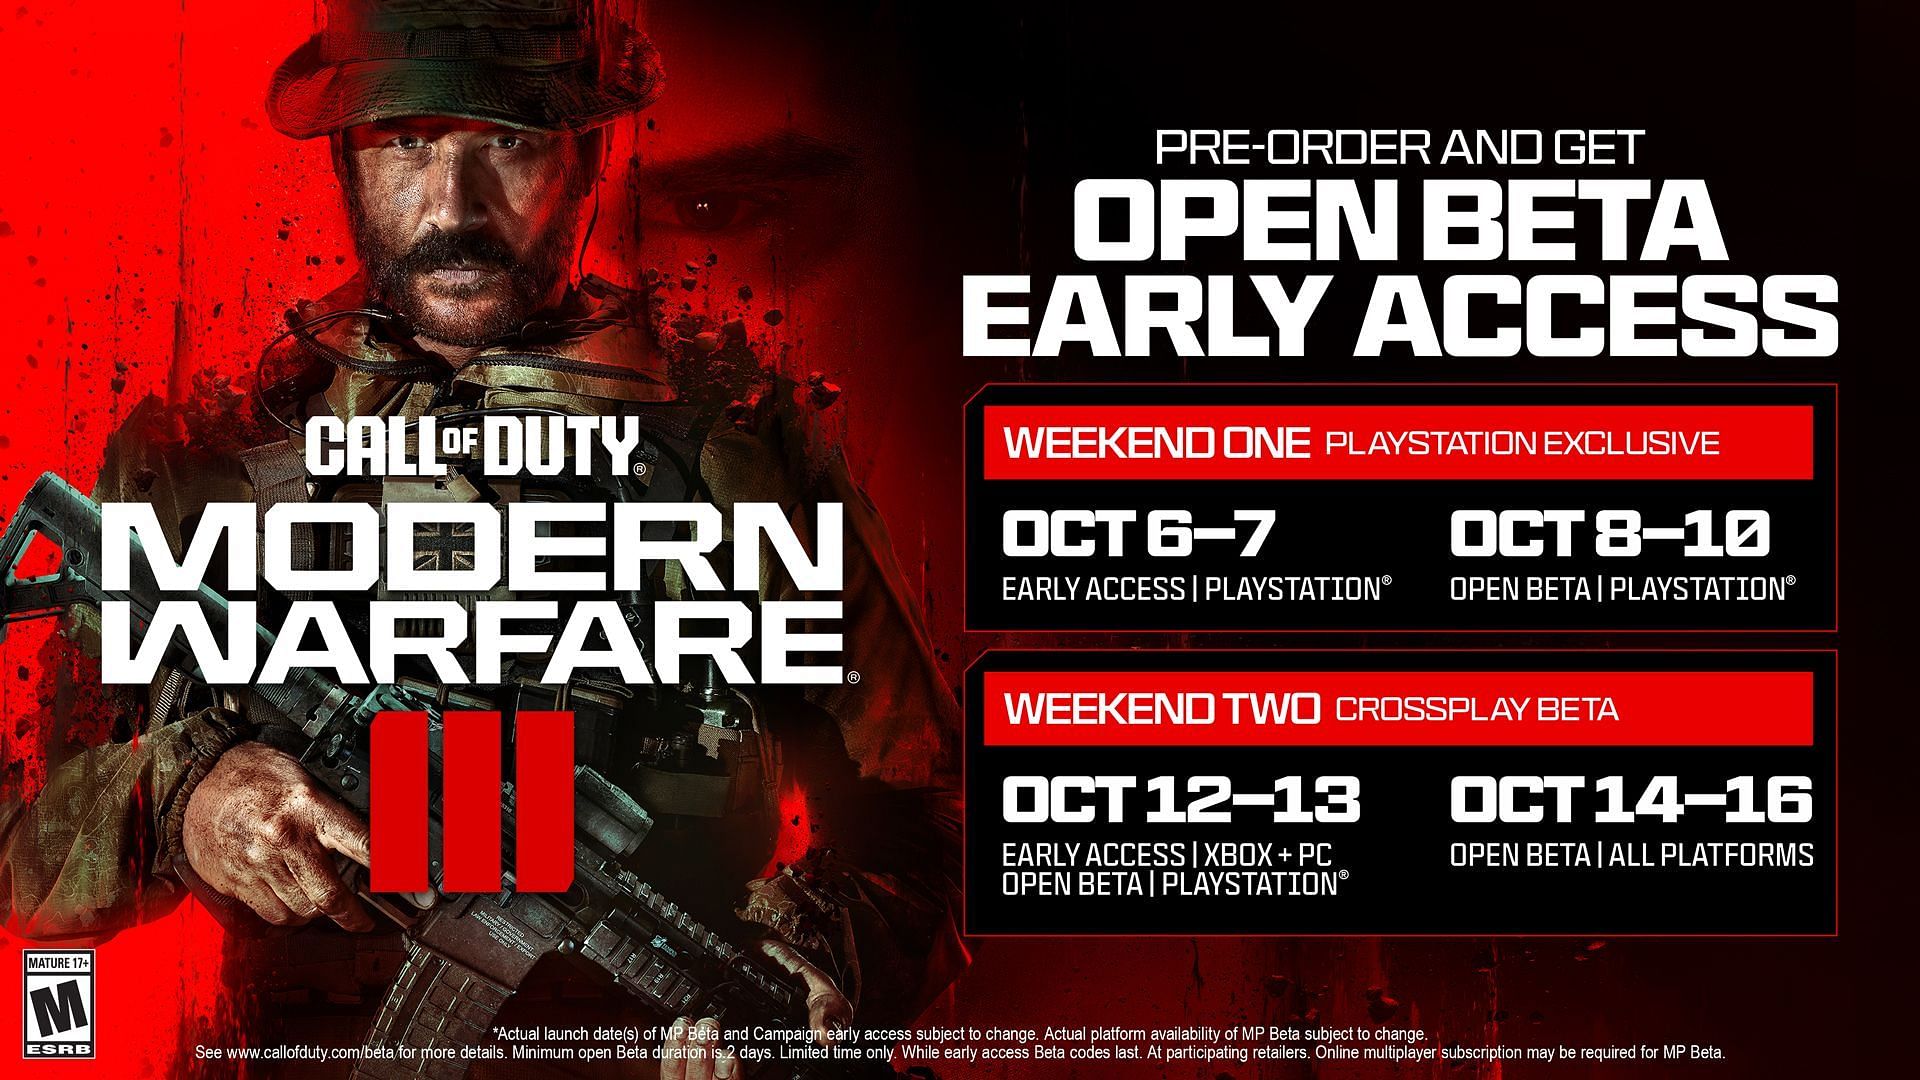 Modern Warfare 3 (MW3) beta dates for PC and Xbox (Image via Activision)